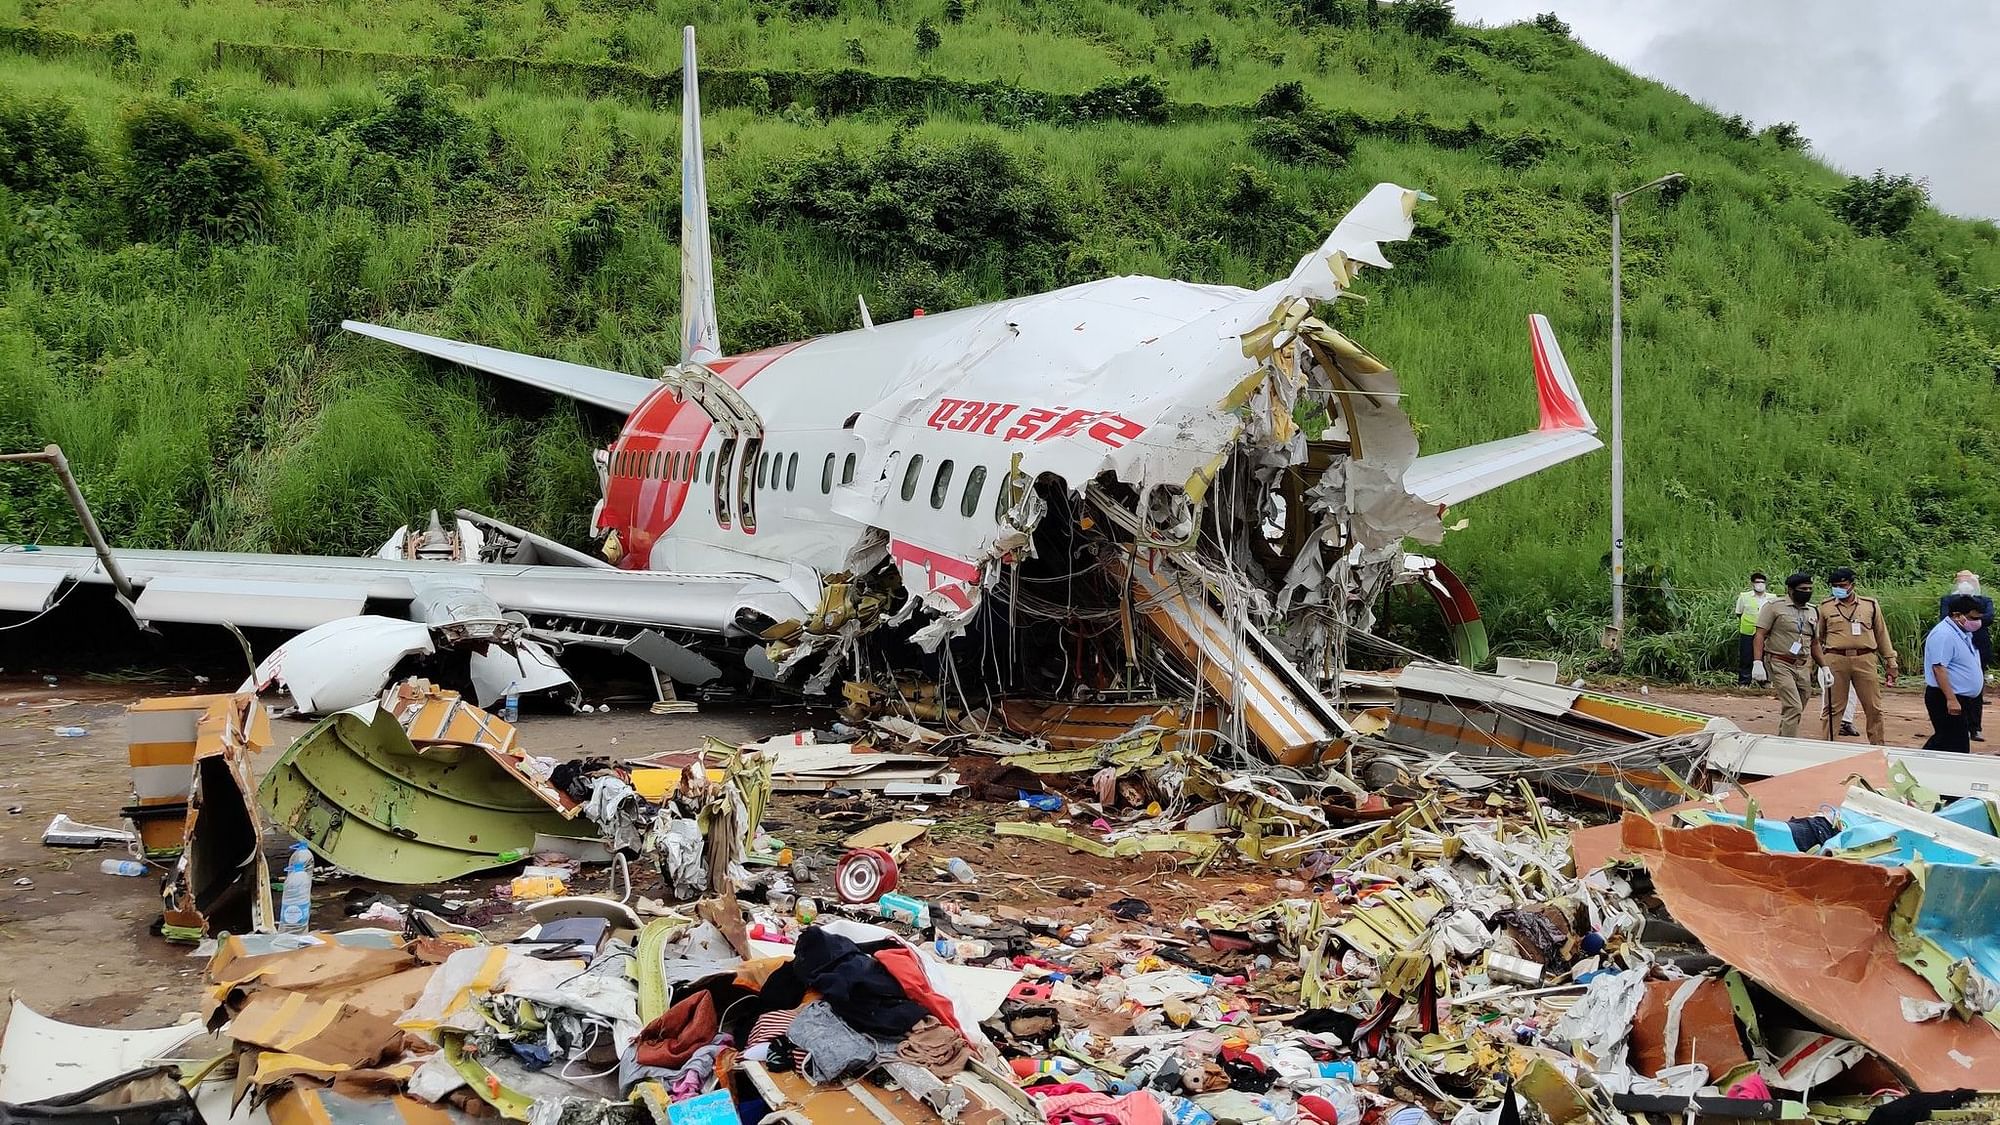 Air India flight (IX-1344) from Dubai carrying 190 passengers skidded off the runway during landing at Karipur Airport in Kozhikode, Kerala on Friday. 